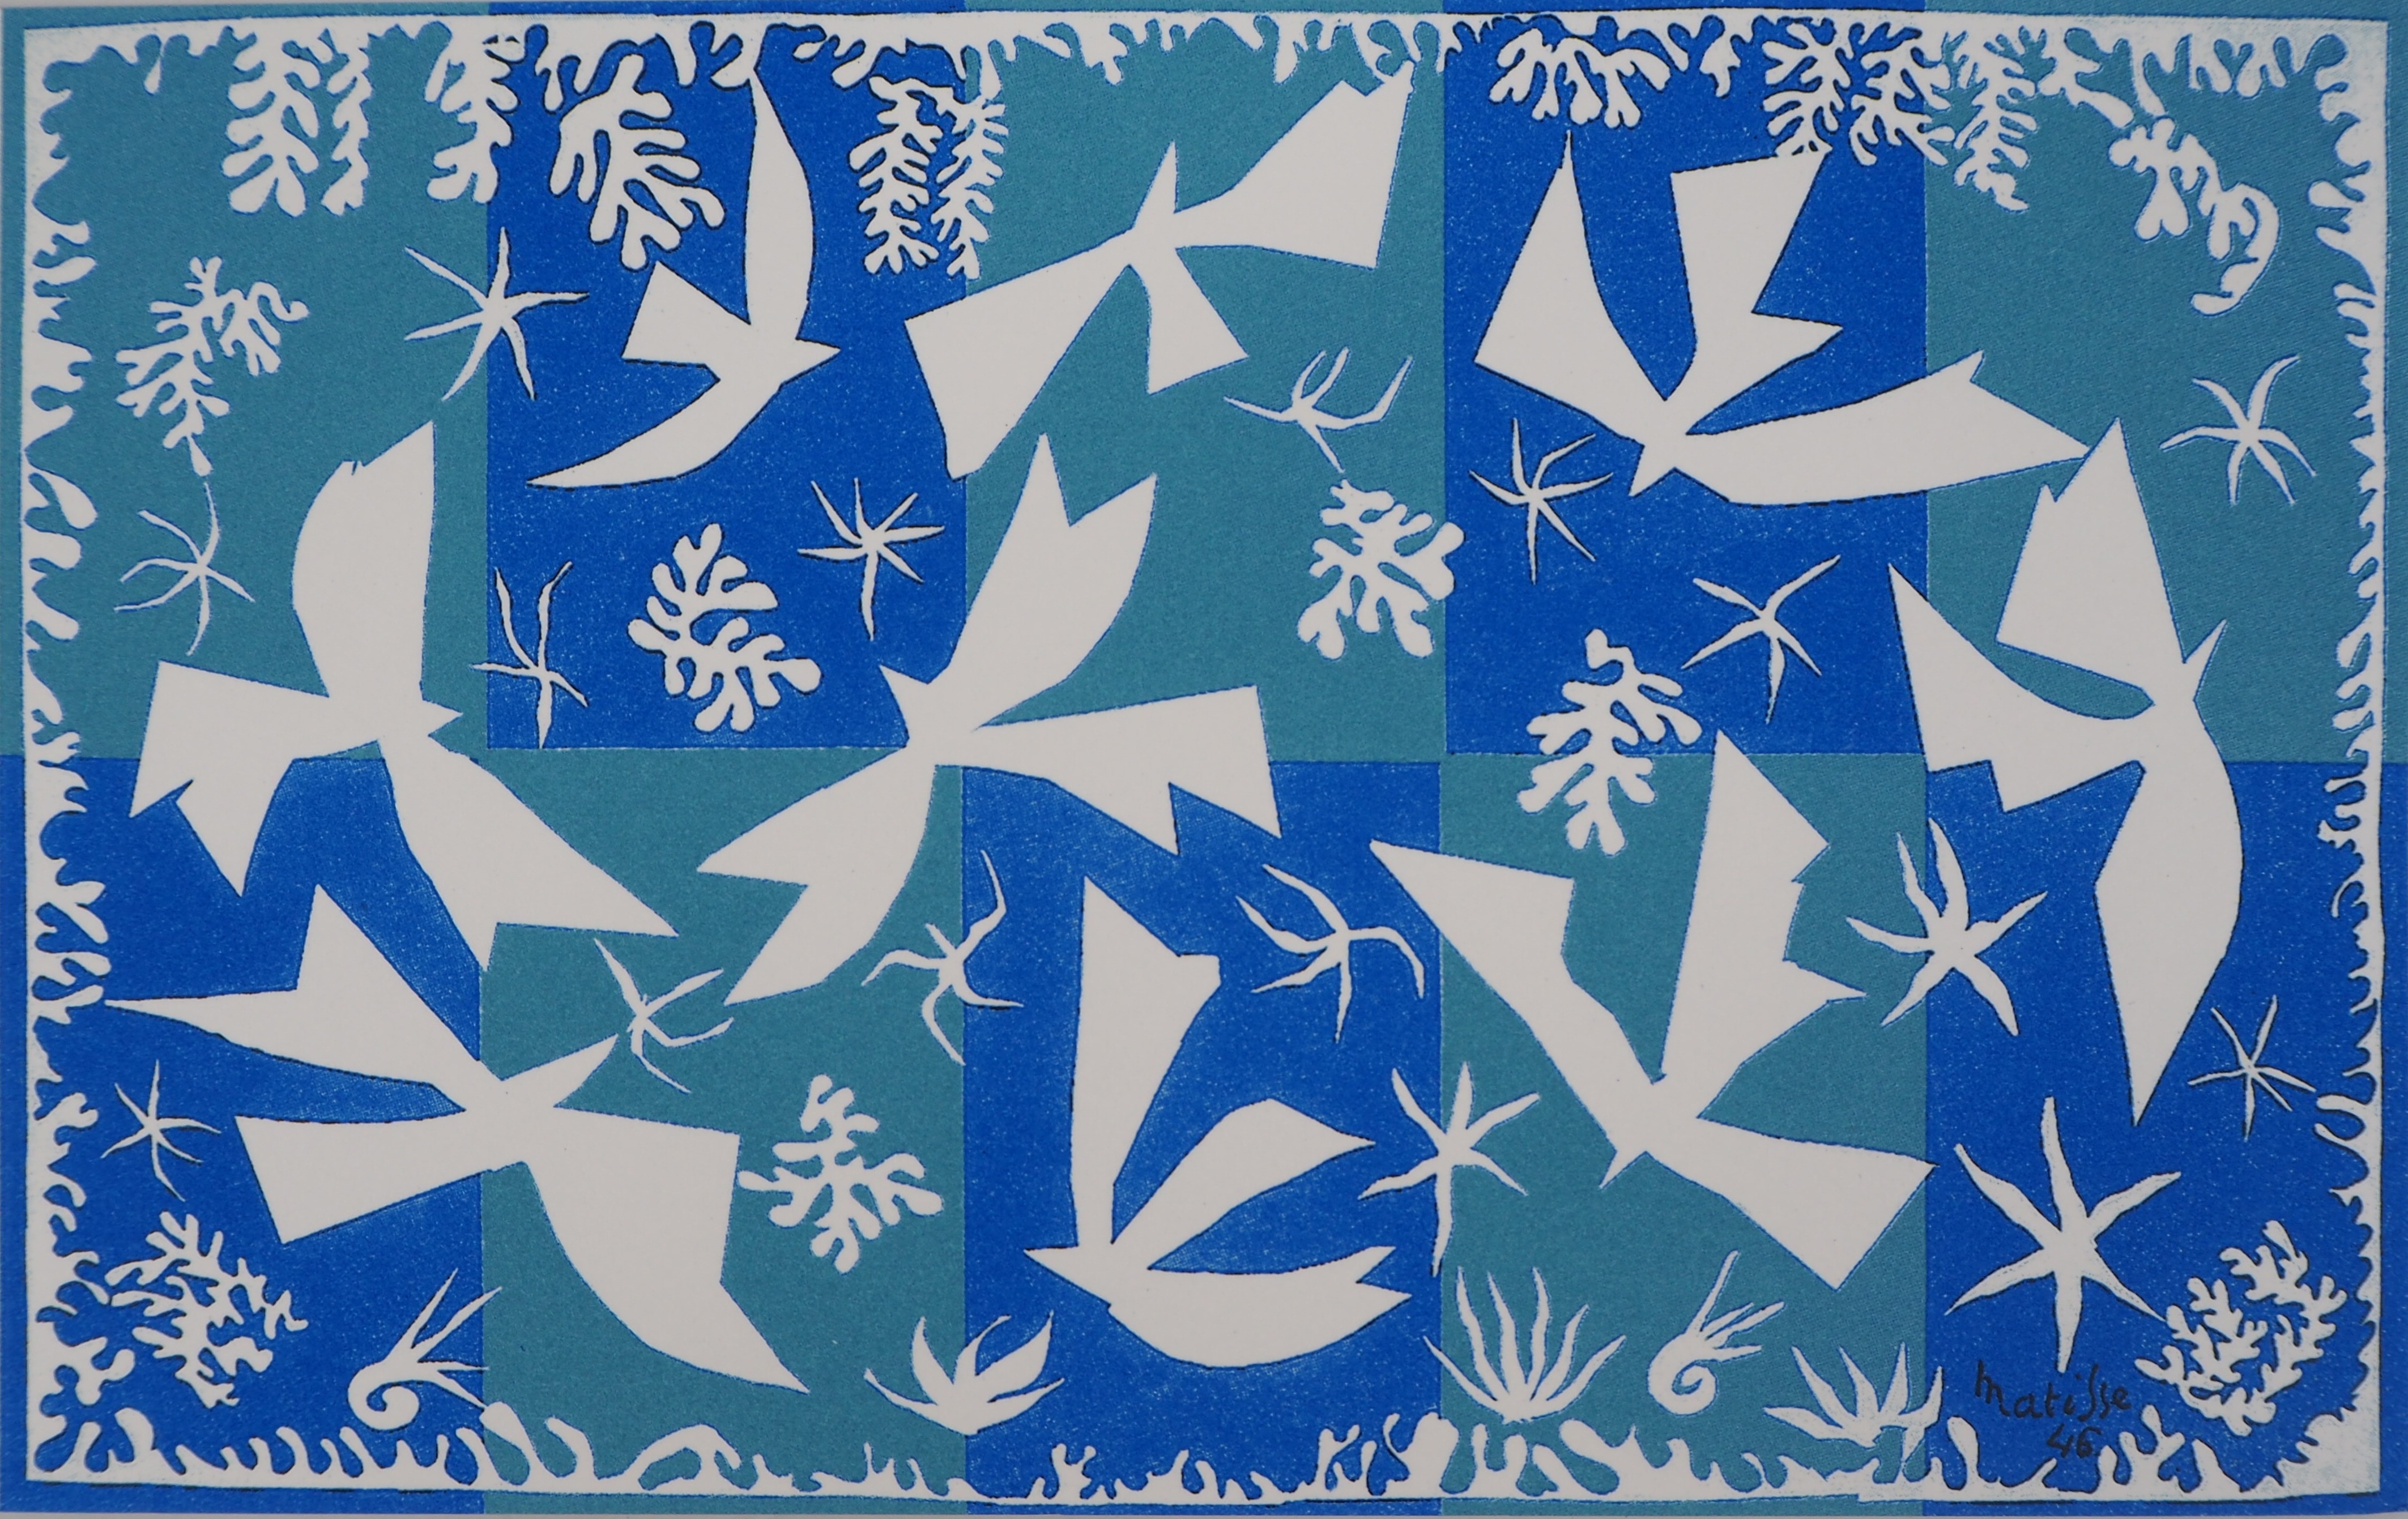 Artwork by Henri Matisse, Polynésie, le ciel, Made of Screenprint